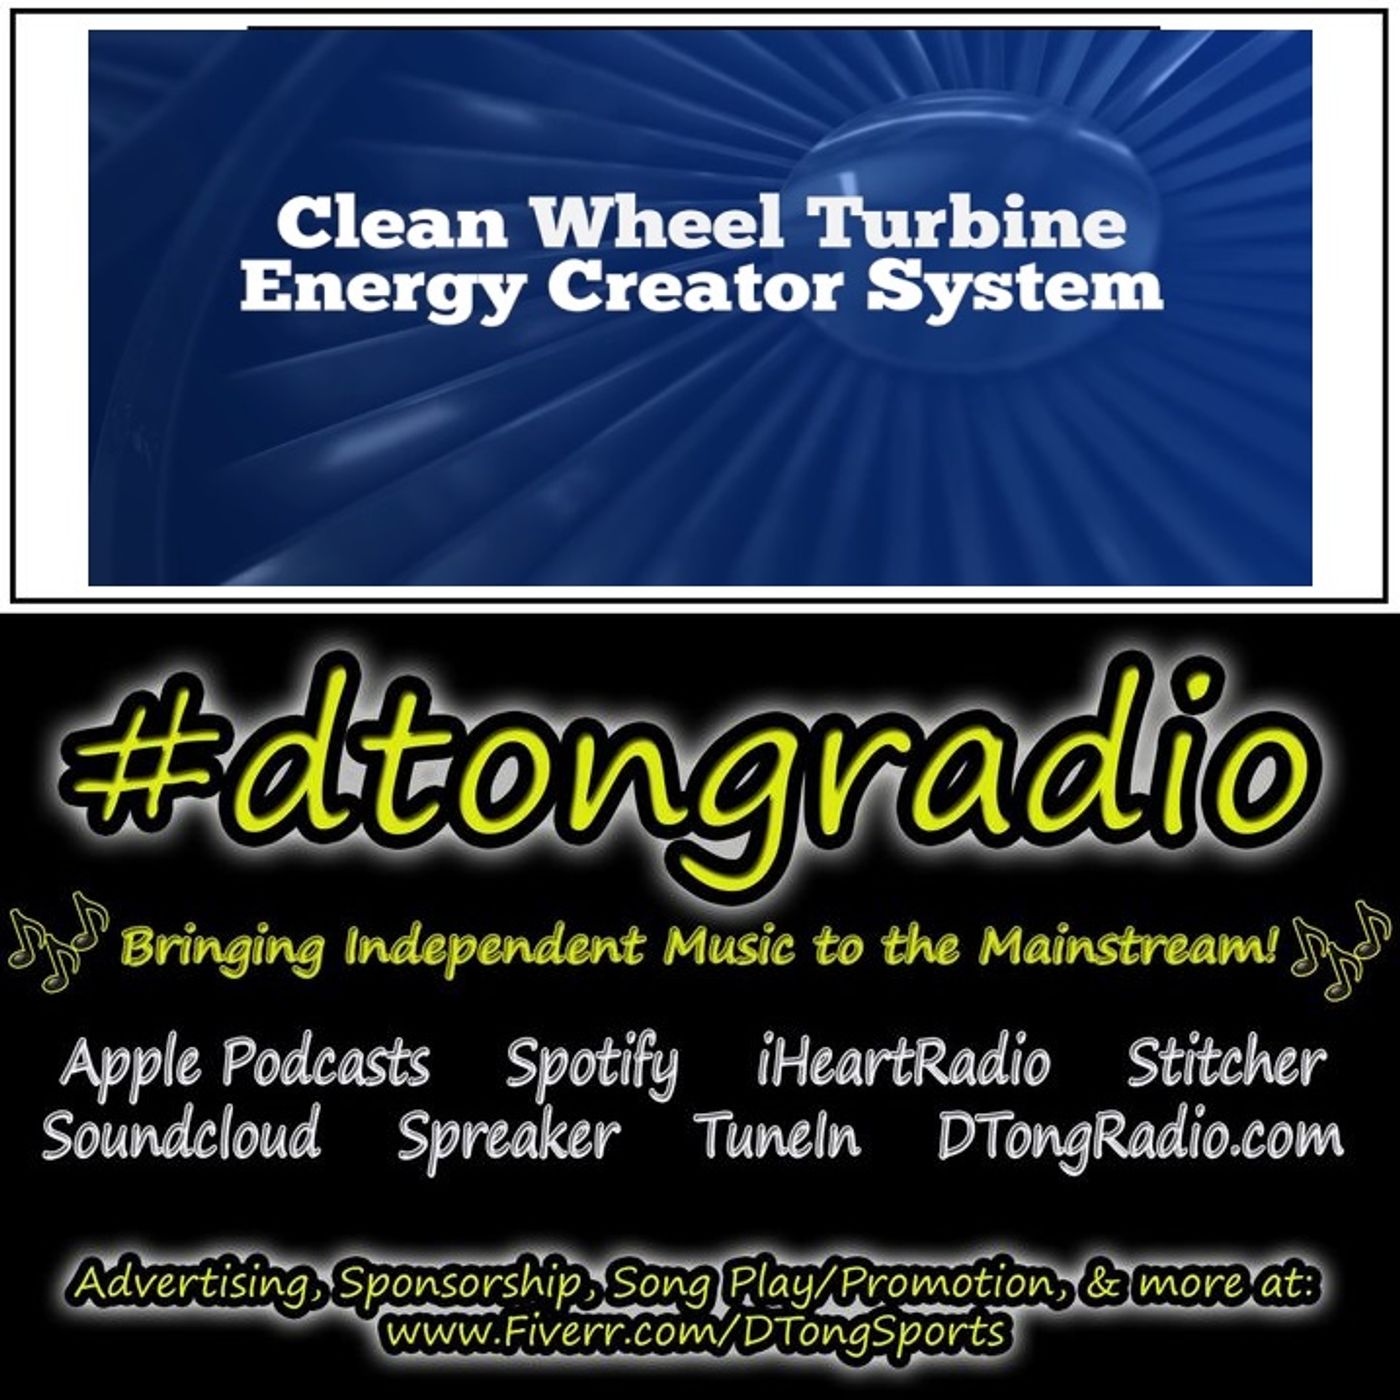 Top Indie Music Artists on #dtongradio - Clean Wheel Turbine Energy Creator System